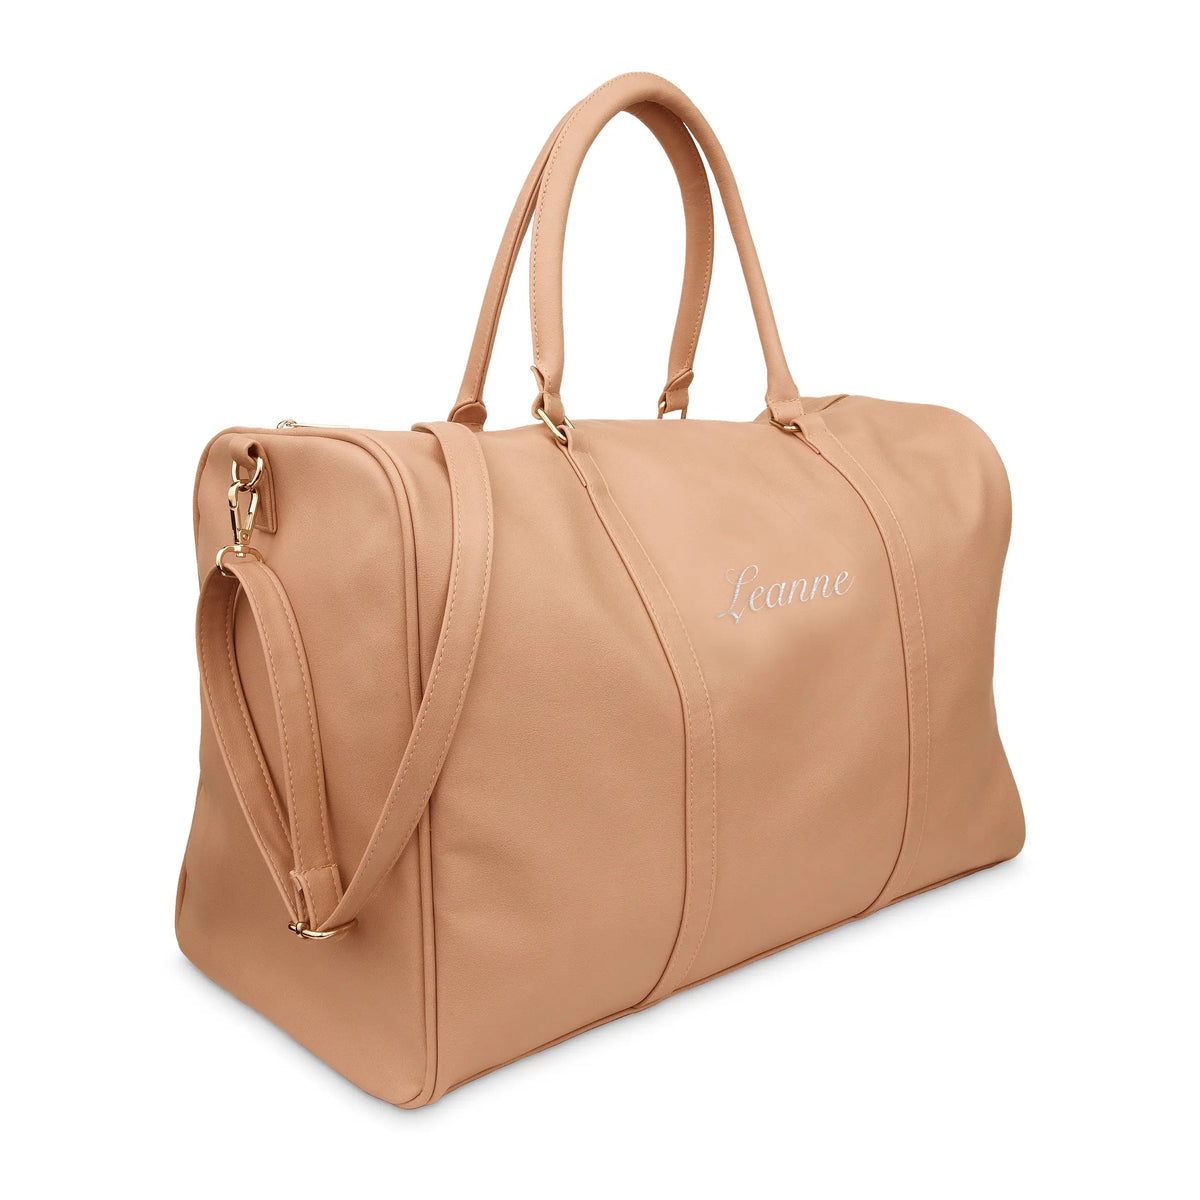 Bags & Luggage - Women's Bags - Backpacks First Class Weekender